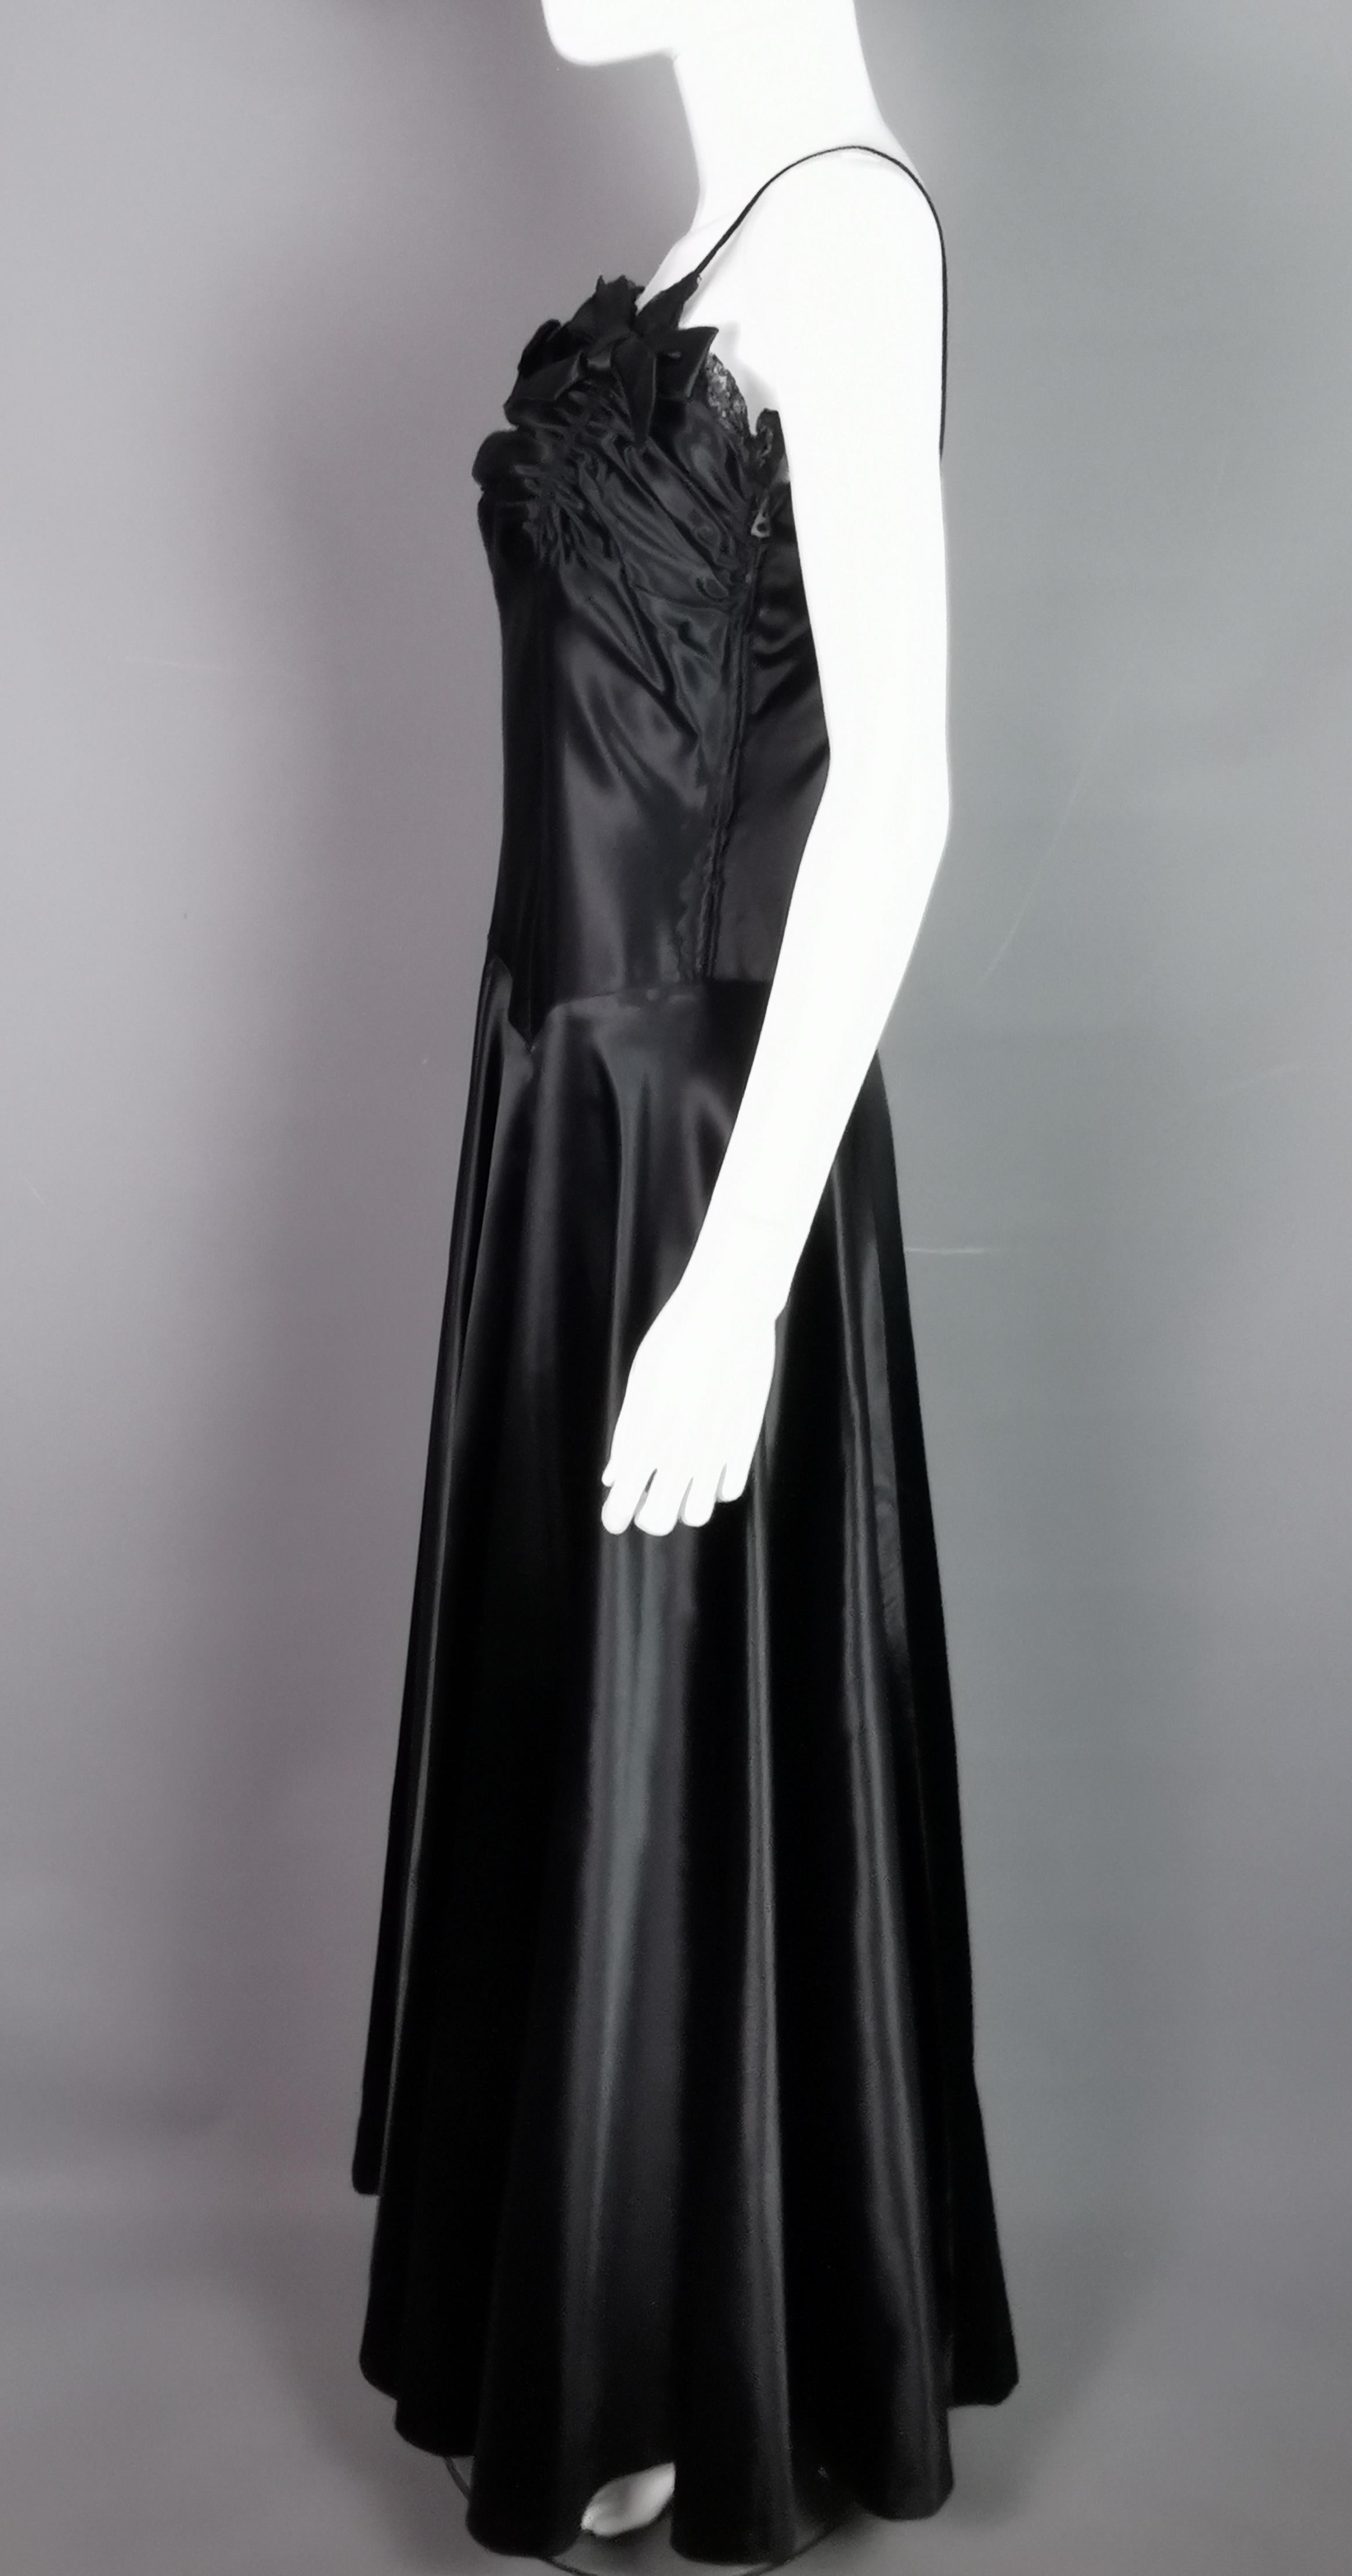 Vintage 1940s Black liquid satin bombshell dress, Evening gown  For Sale 2